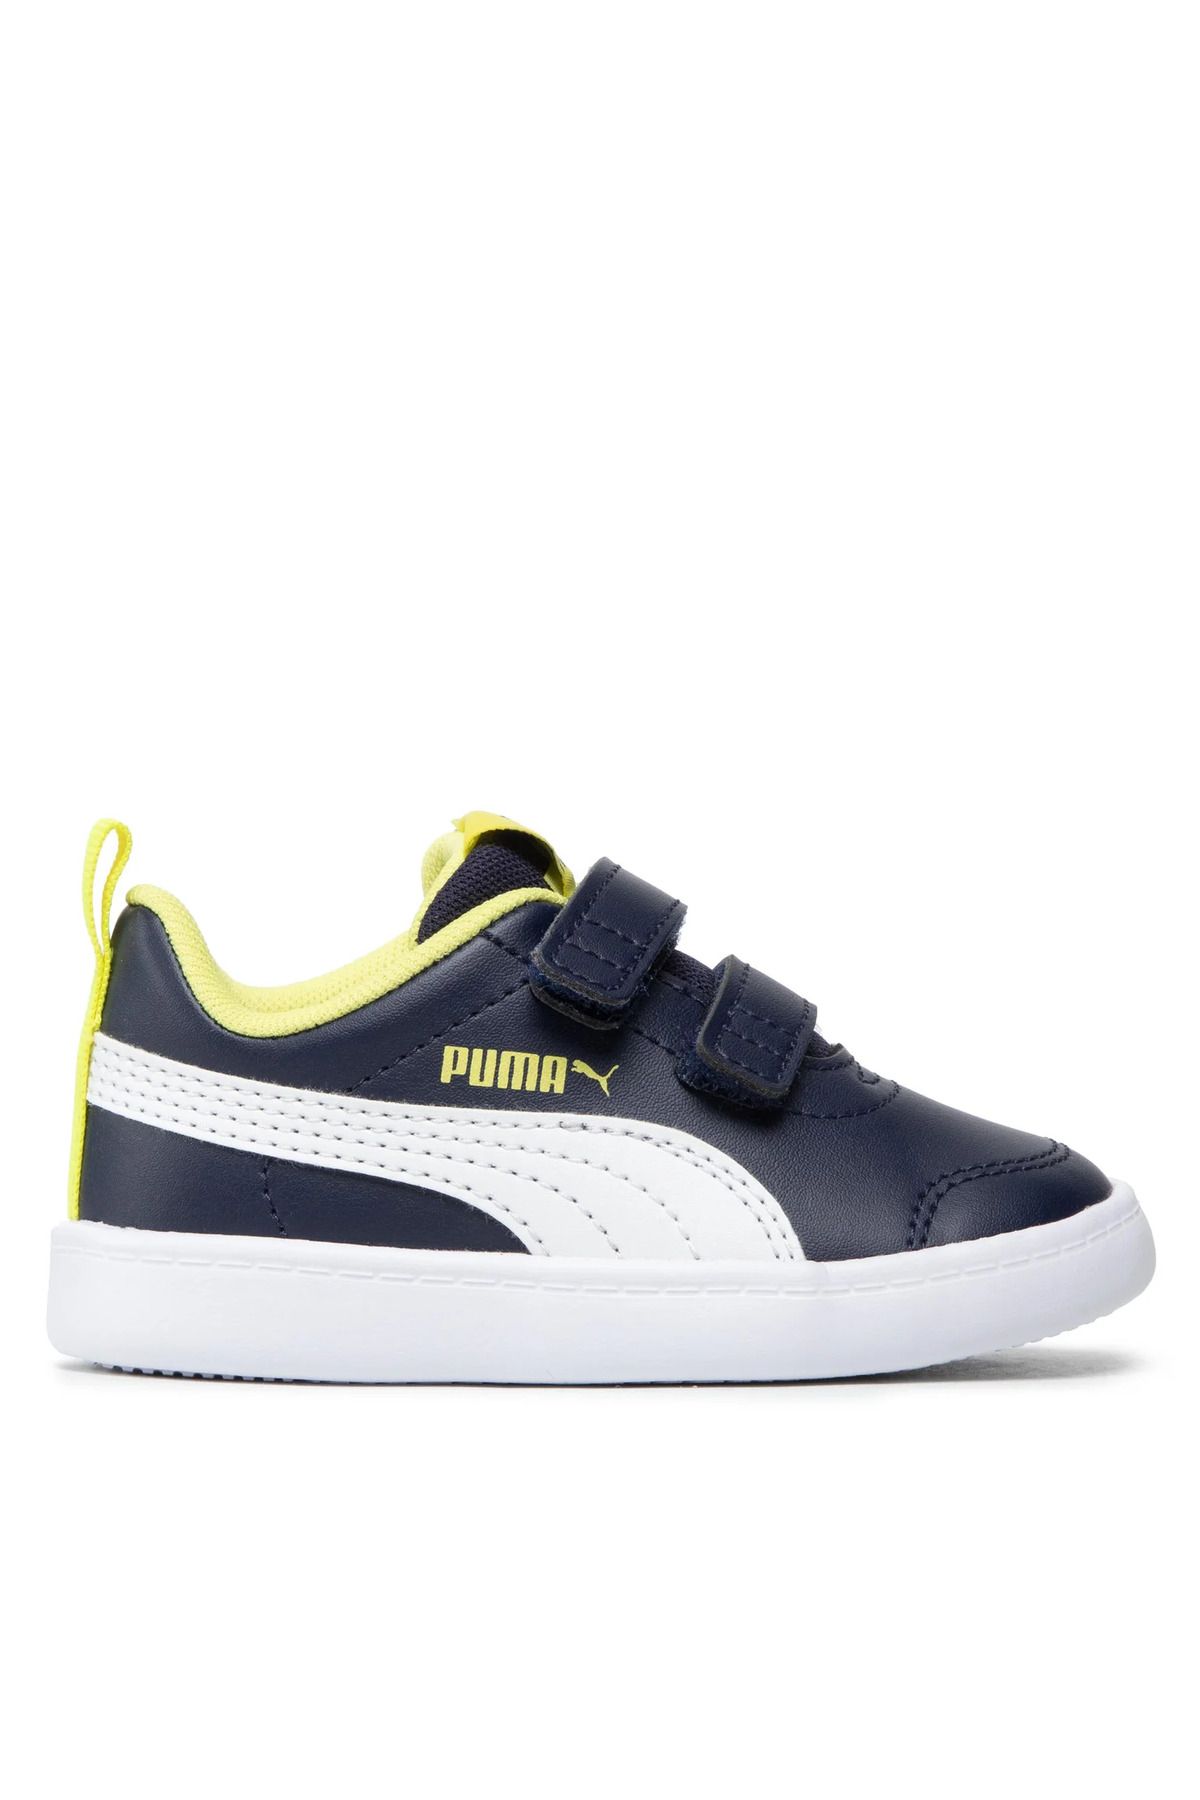 Puma 371544-22 Courtflex V2 V Inf Çocuk Lacivert Sneaker Spor Ayakkabı